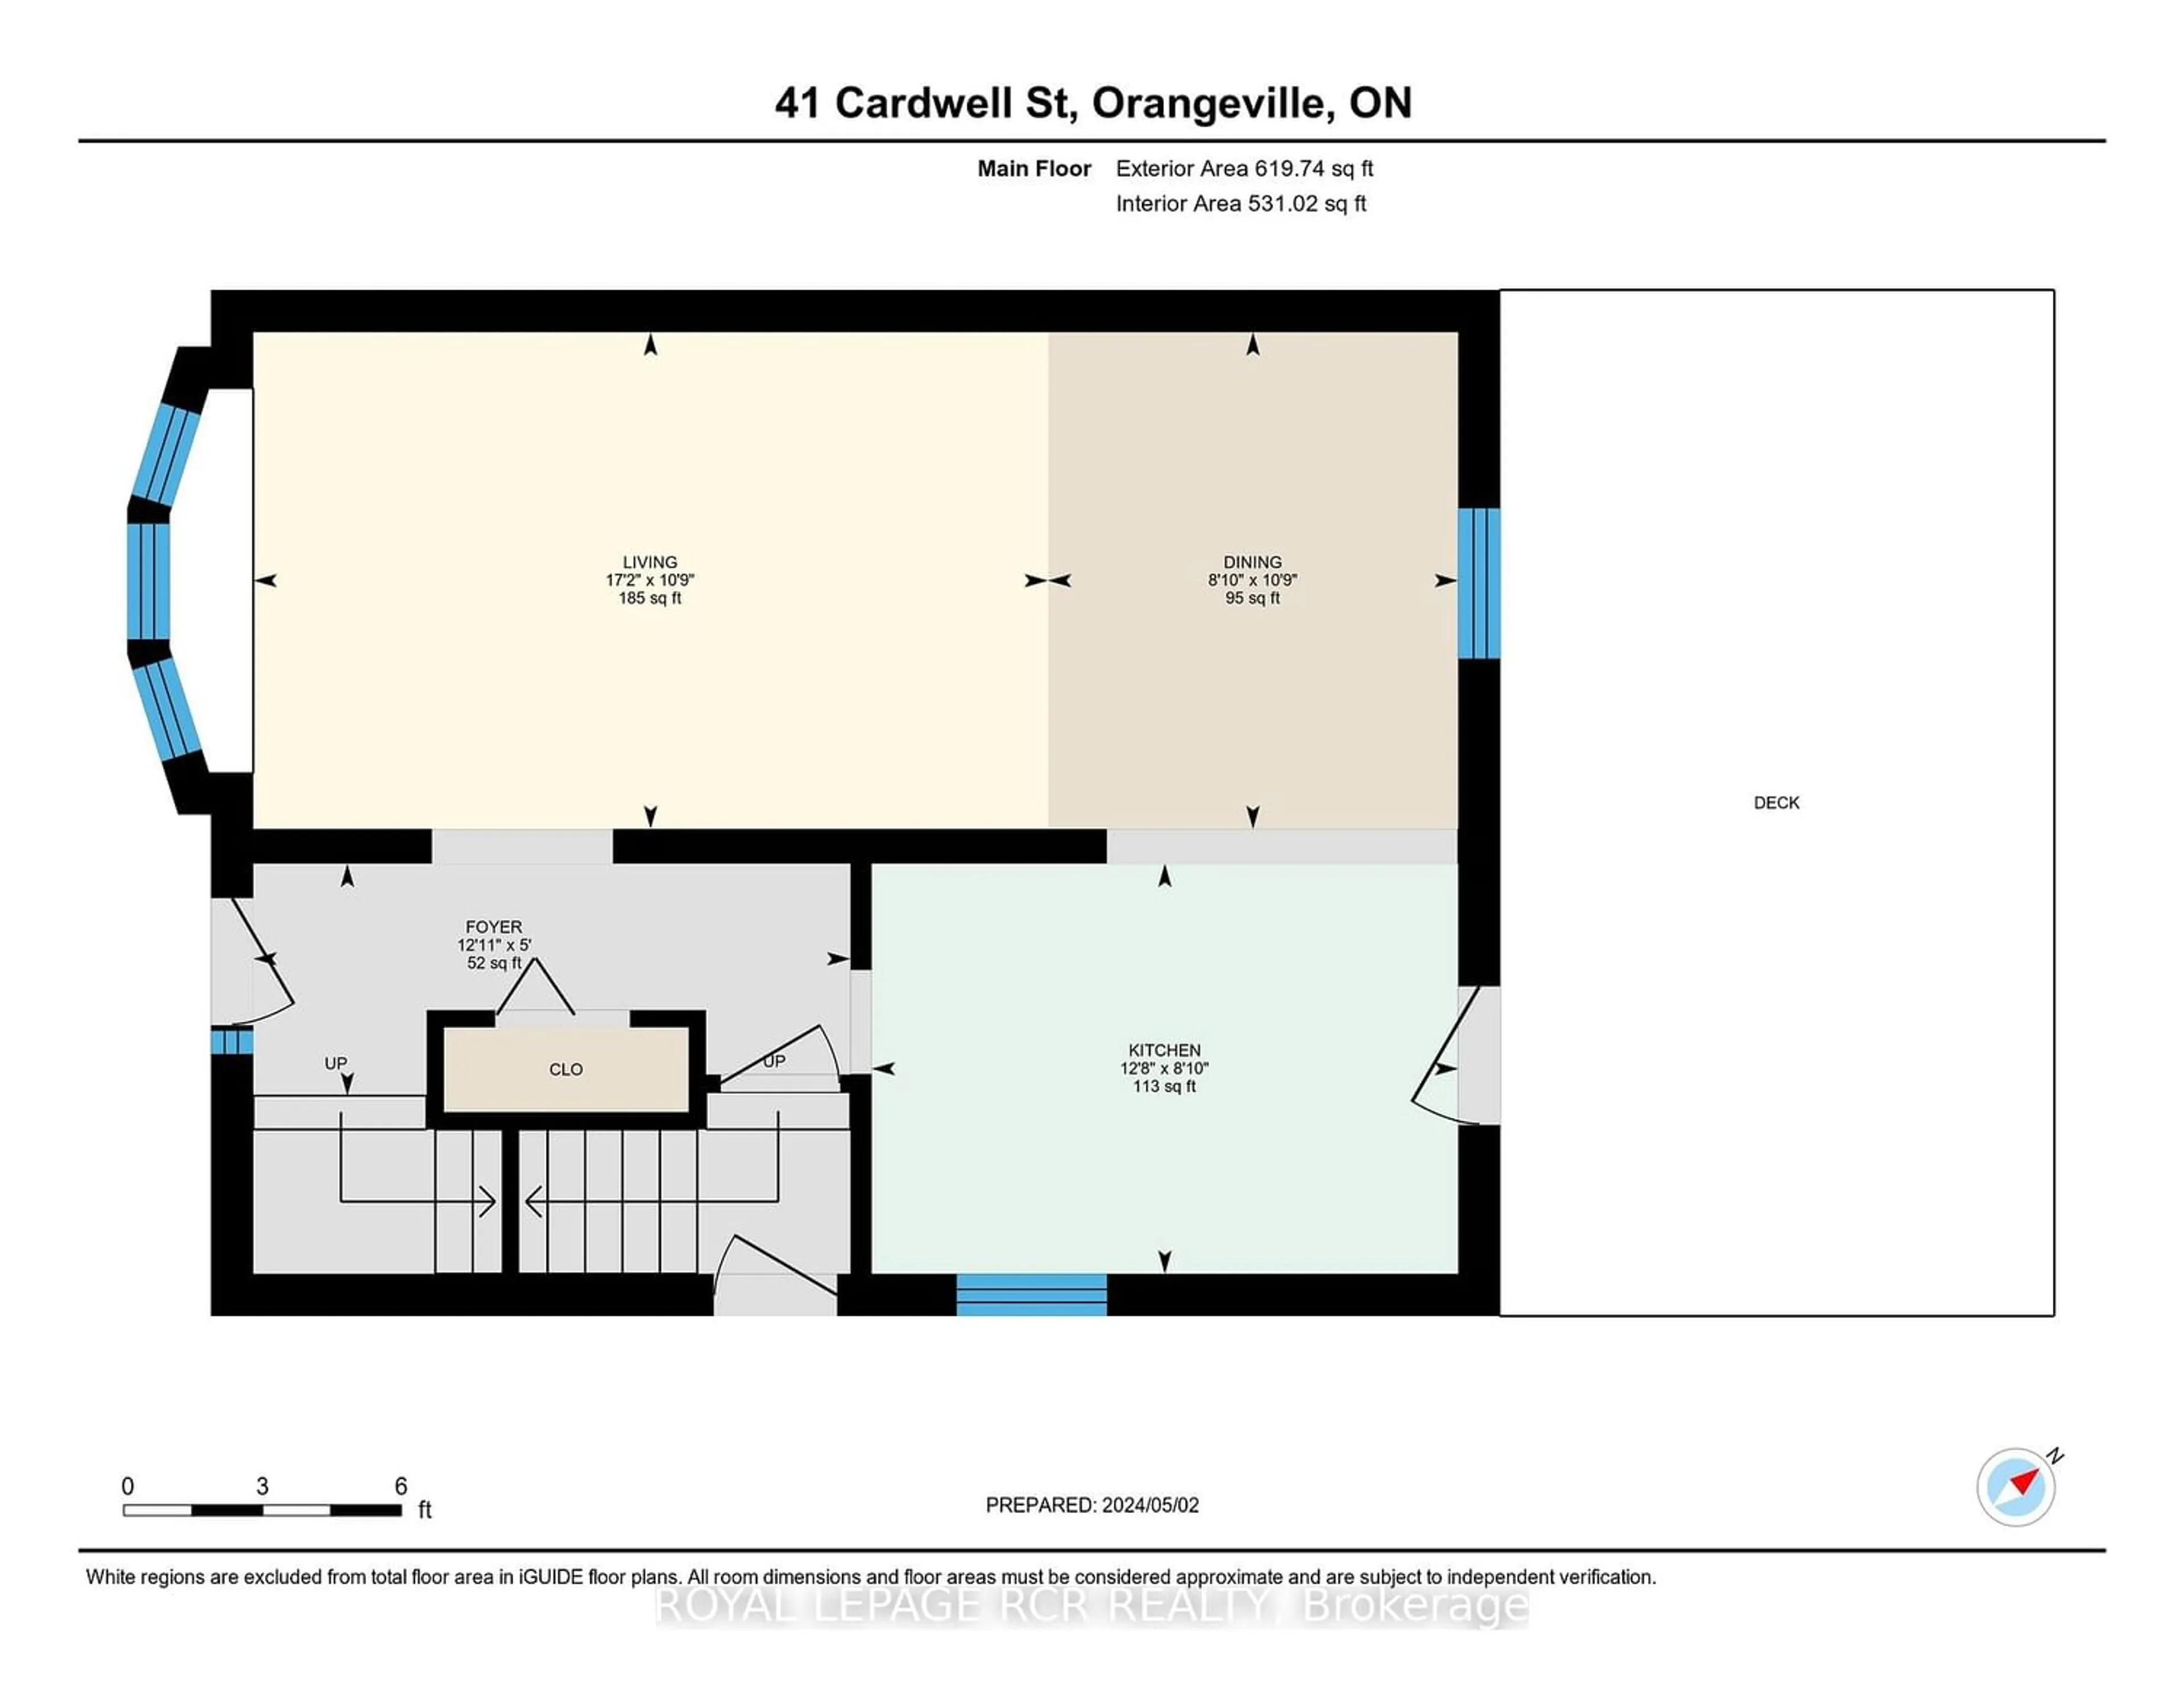 Floor plan for 41 Cardwell St, Orangeville Ontario L9W 2V7